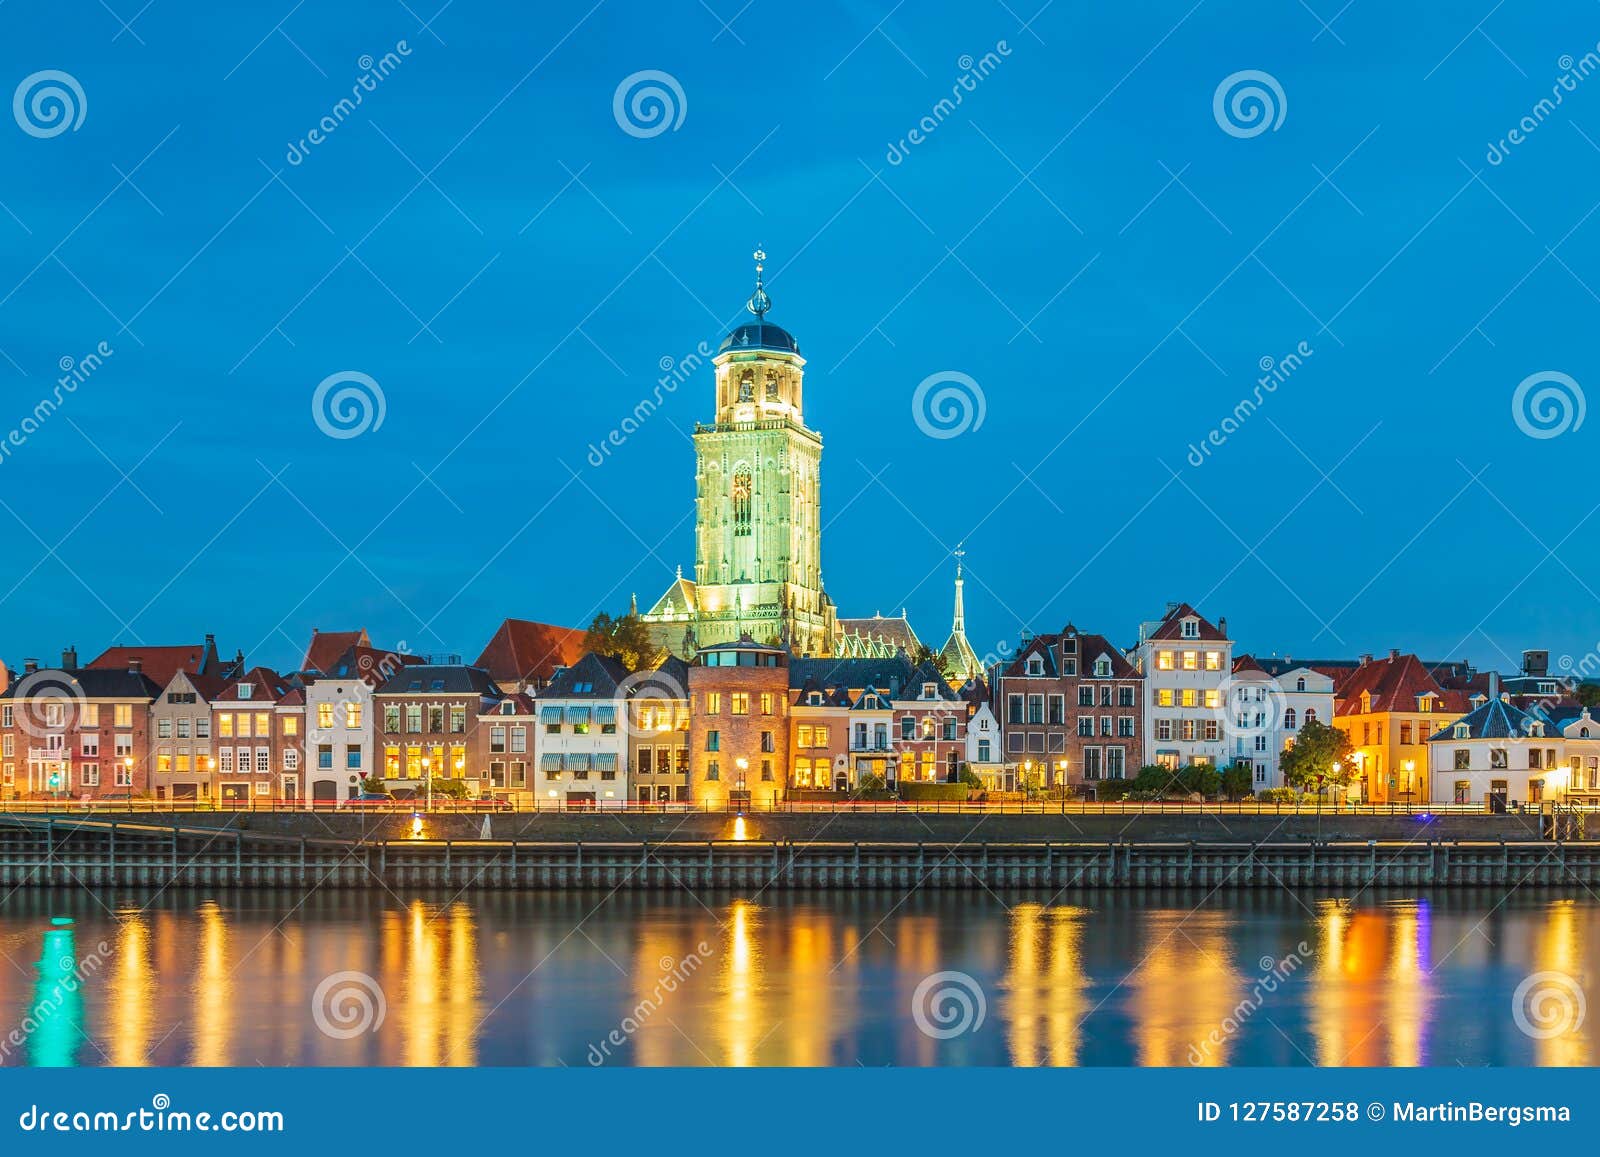 the dutch city of deventer in overijssel with the river ijssel i